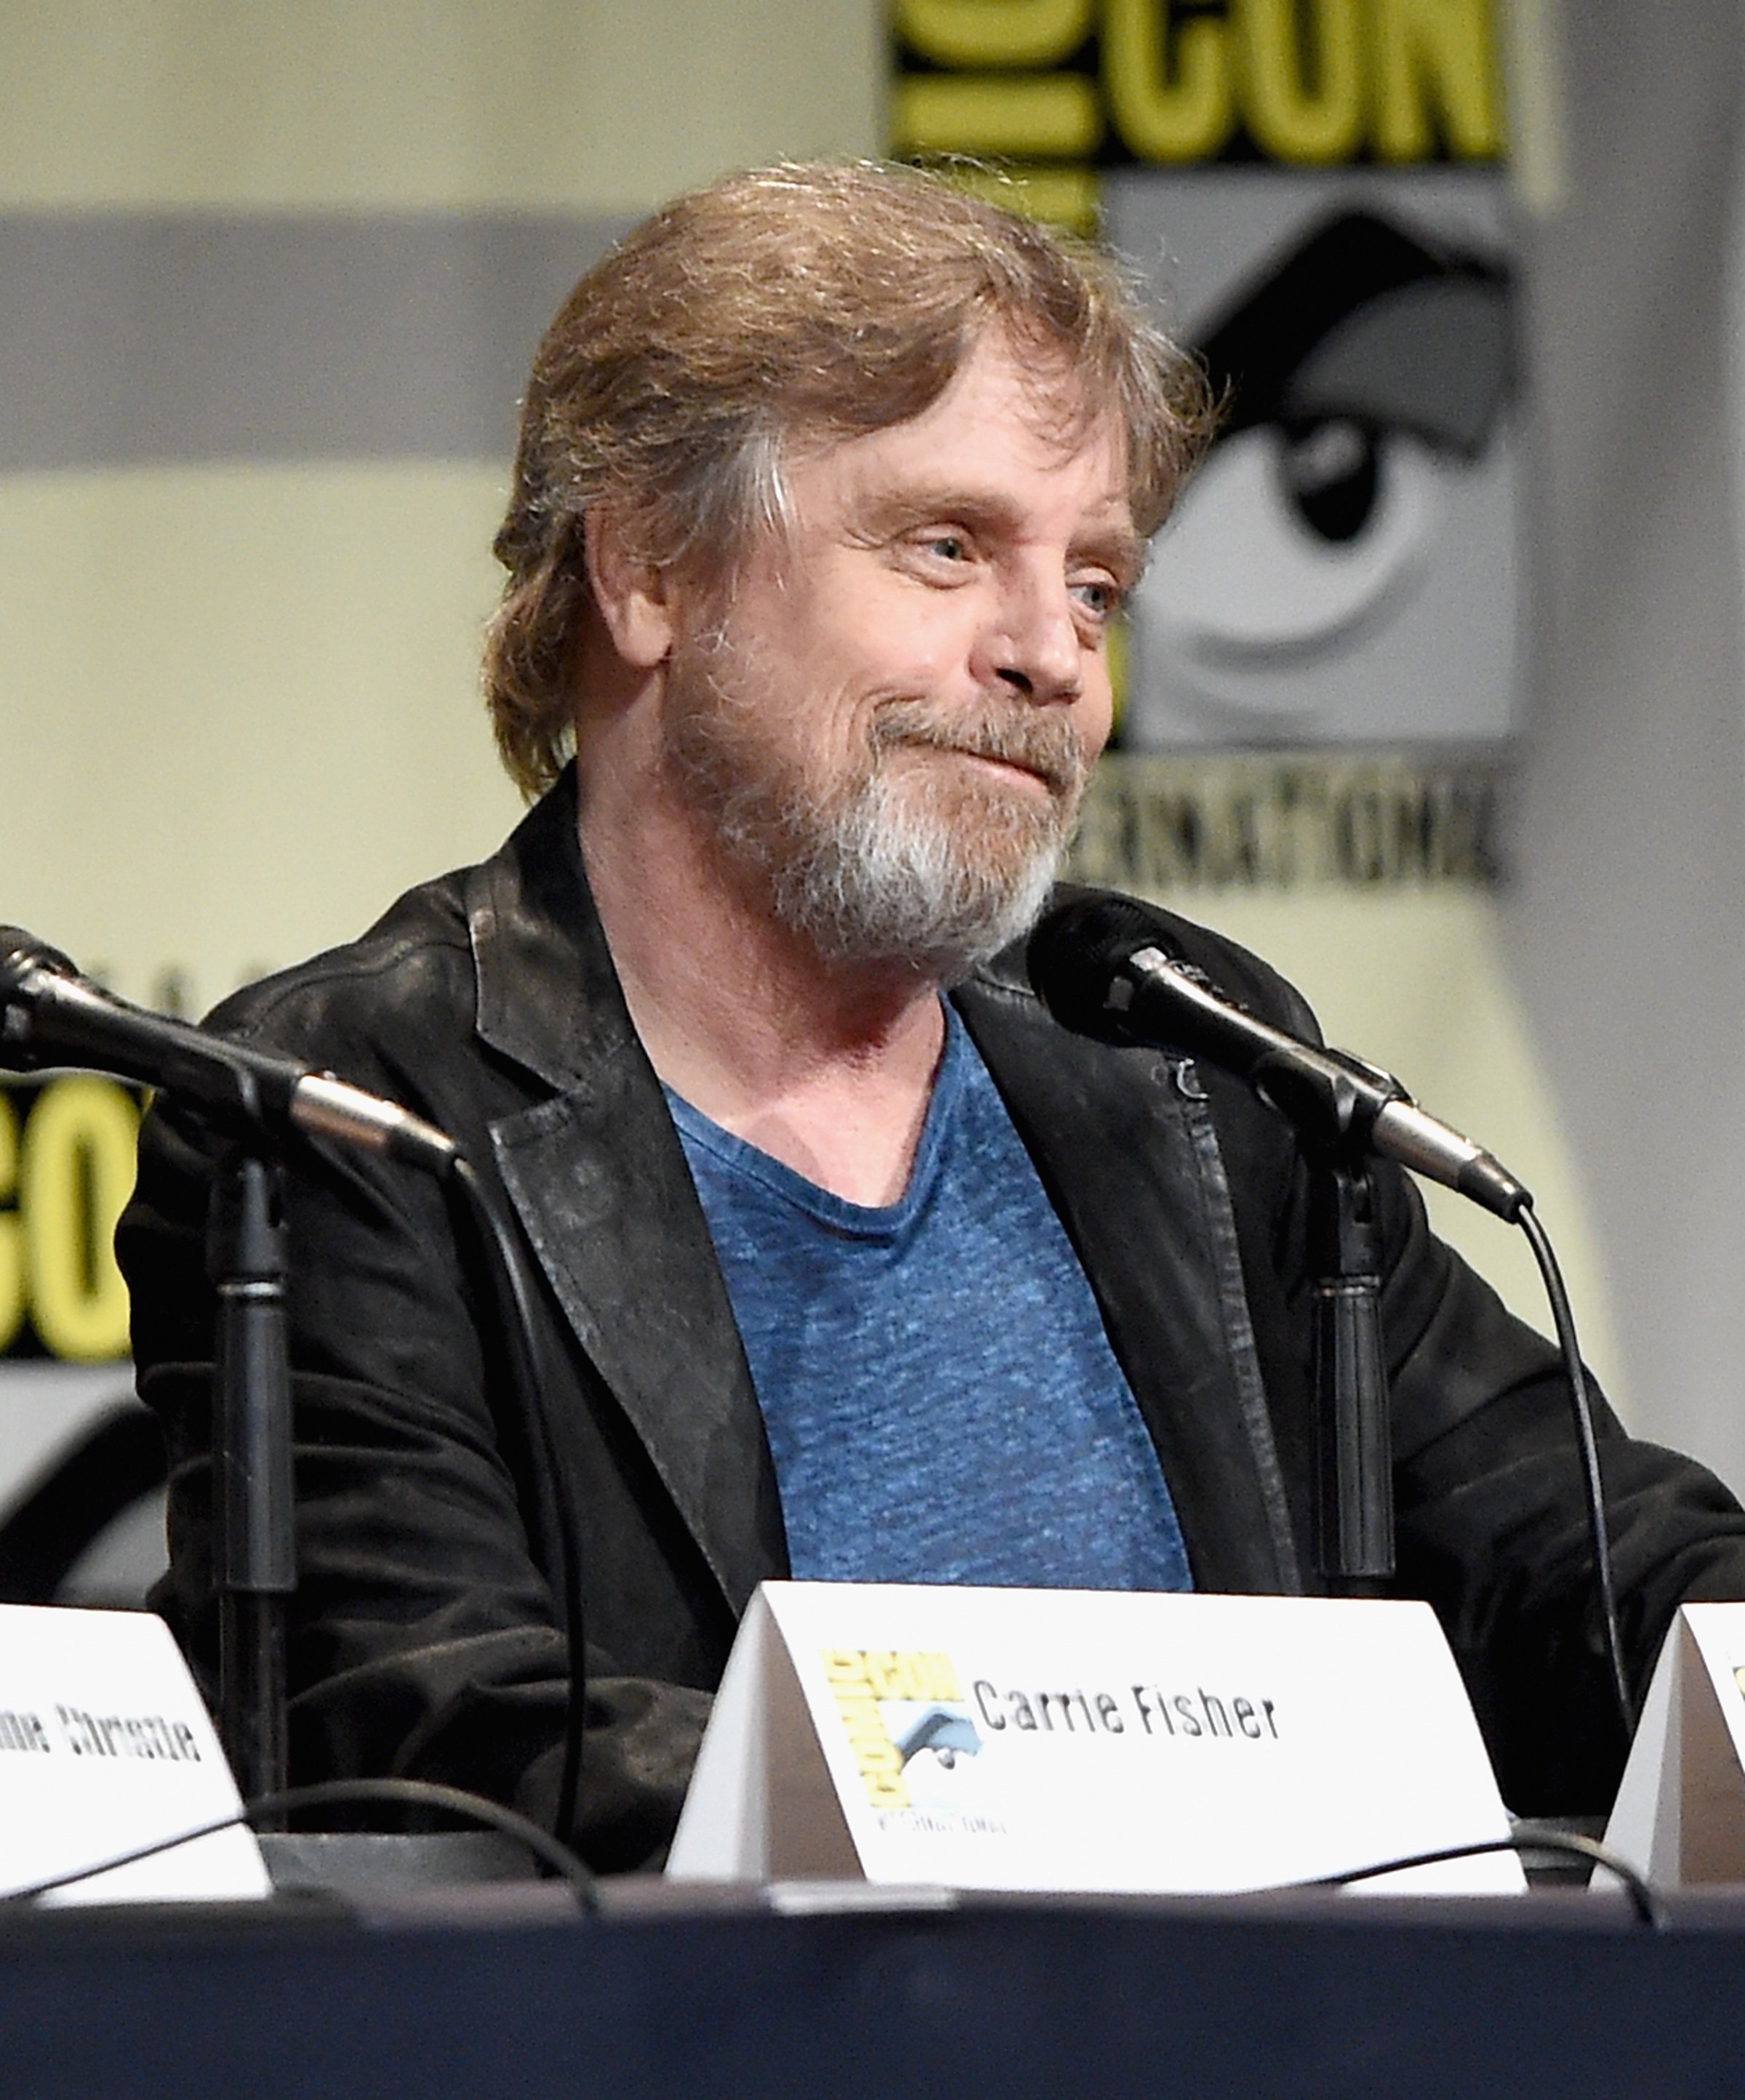 Star Wars: The Force Awakens Panel At San Diego Comic Con - Comic-Con International 2015